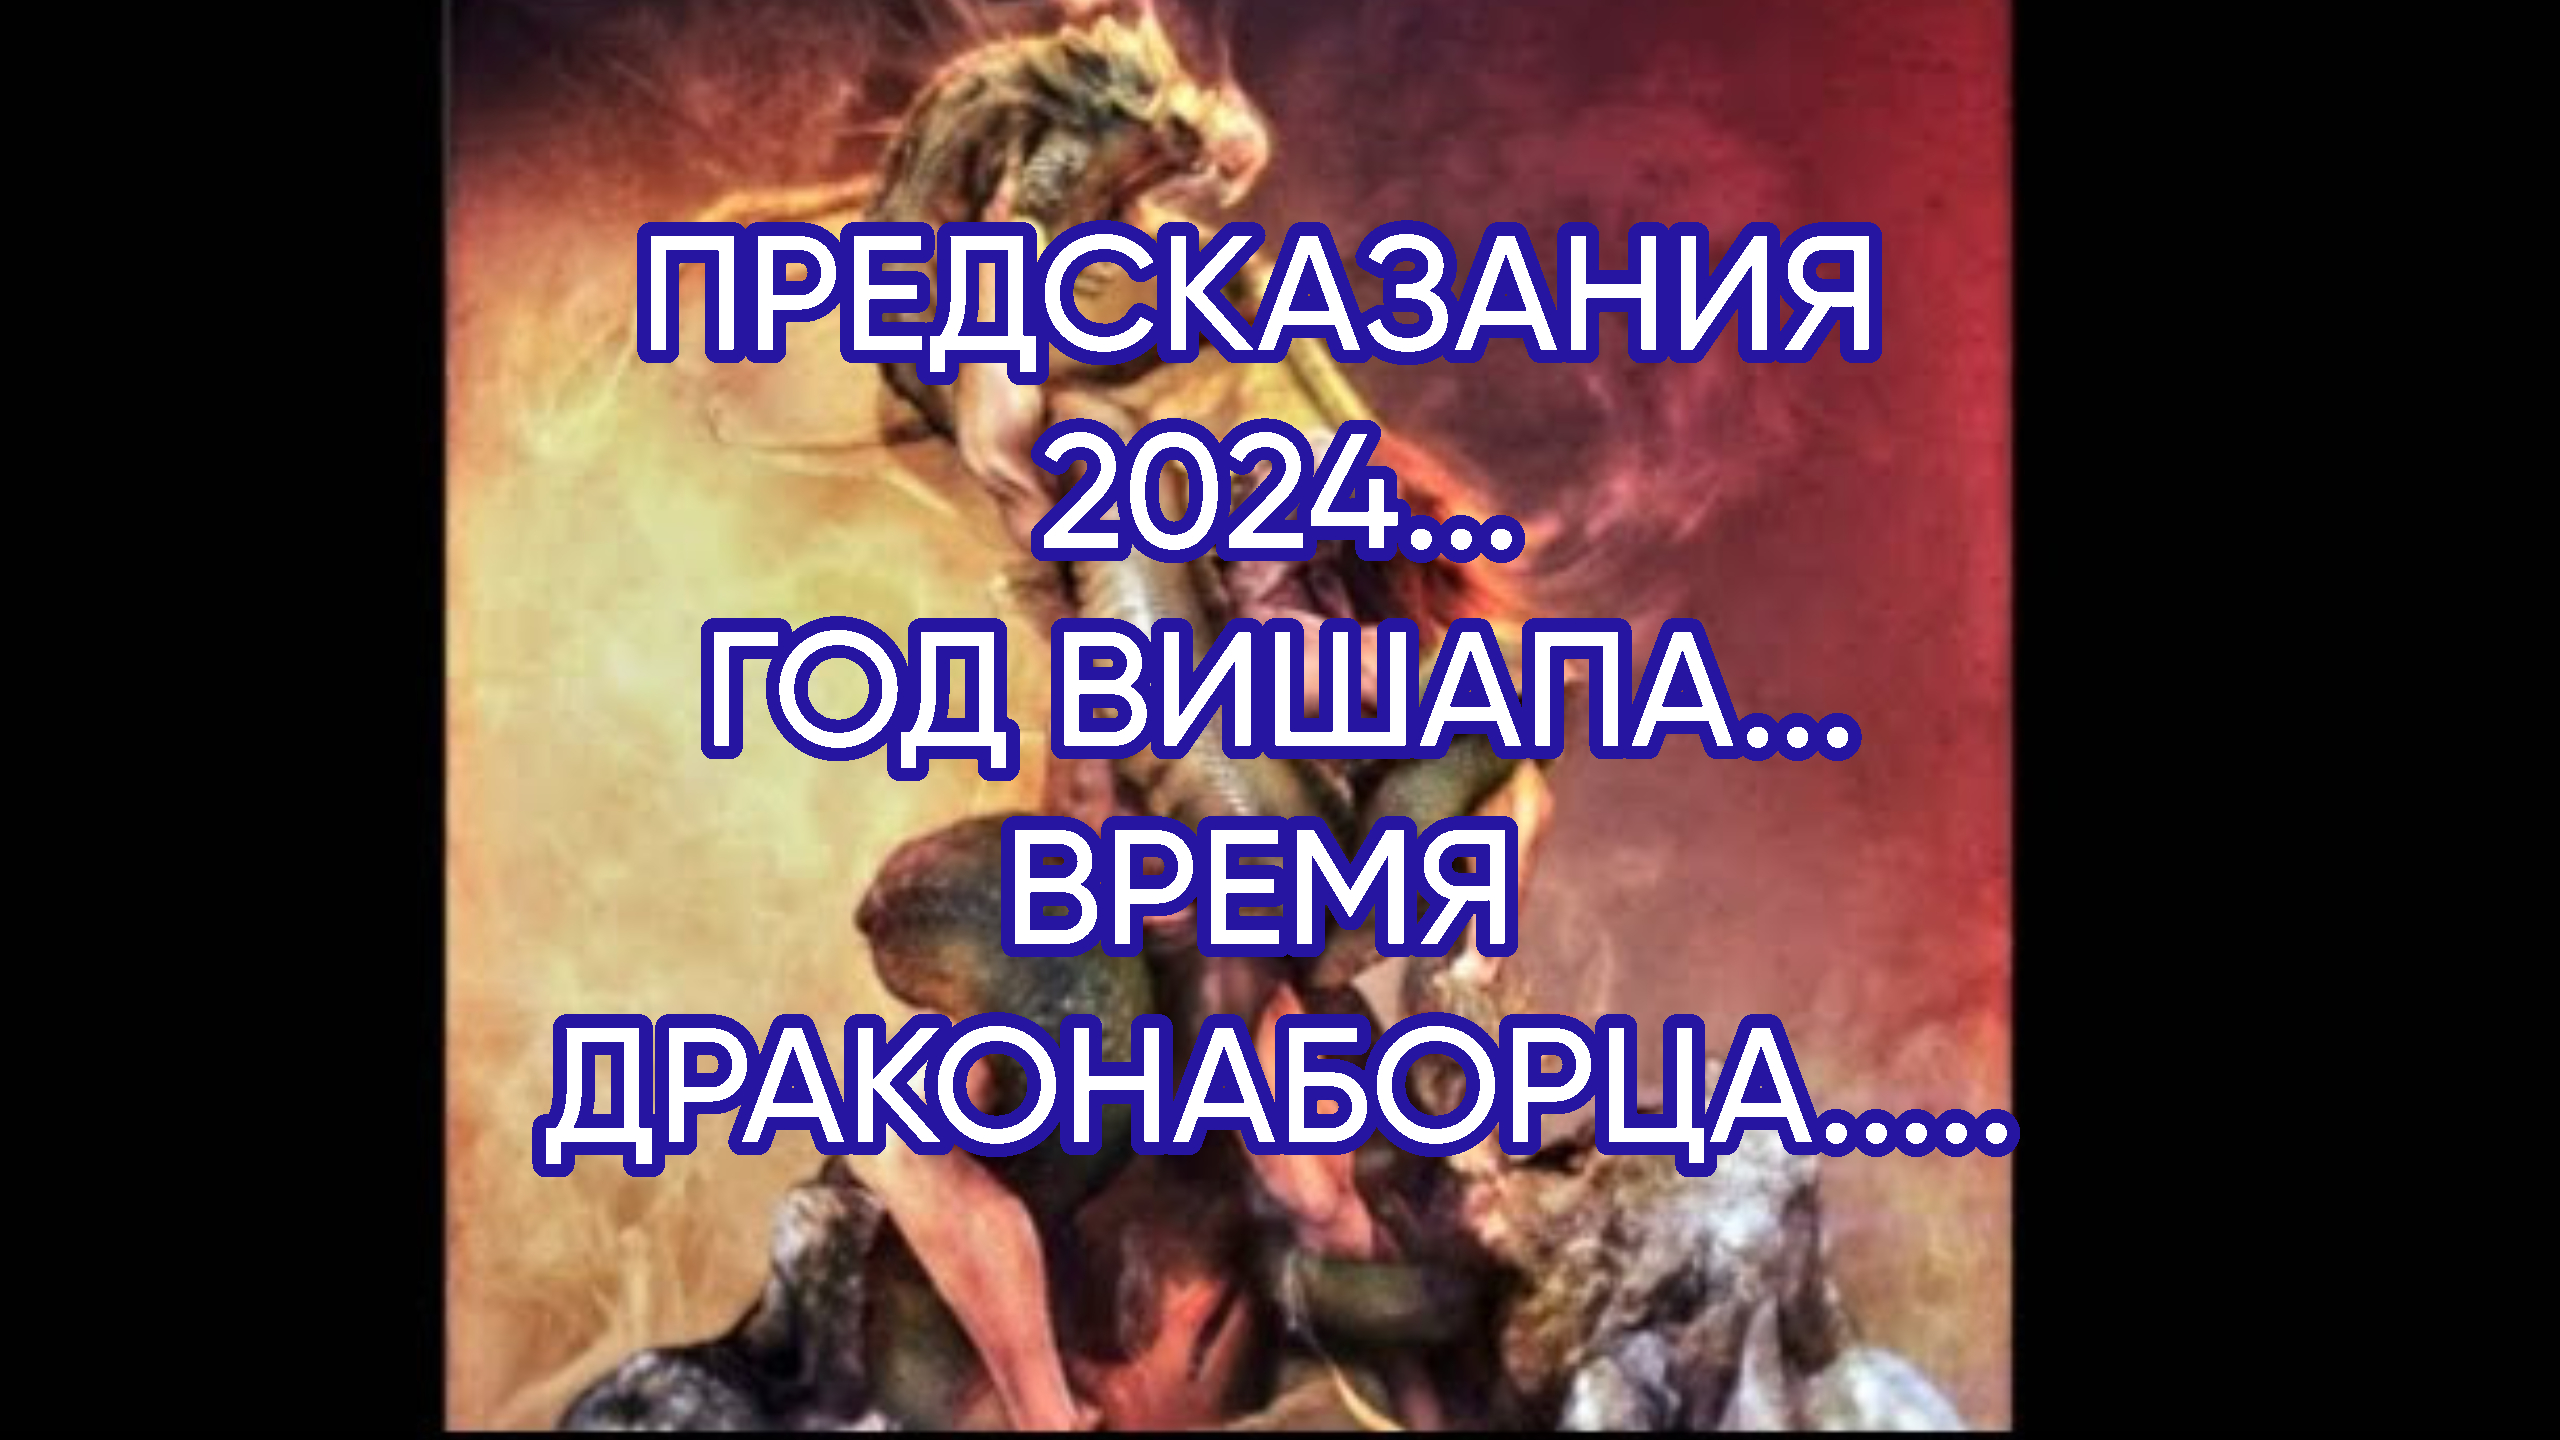 Предсказания на 2024. Пророчества на 2024 год. Предсказания на 2024 год журнала. Предсказание ванги на 2024 год читать